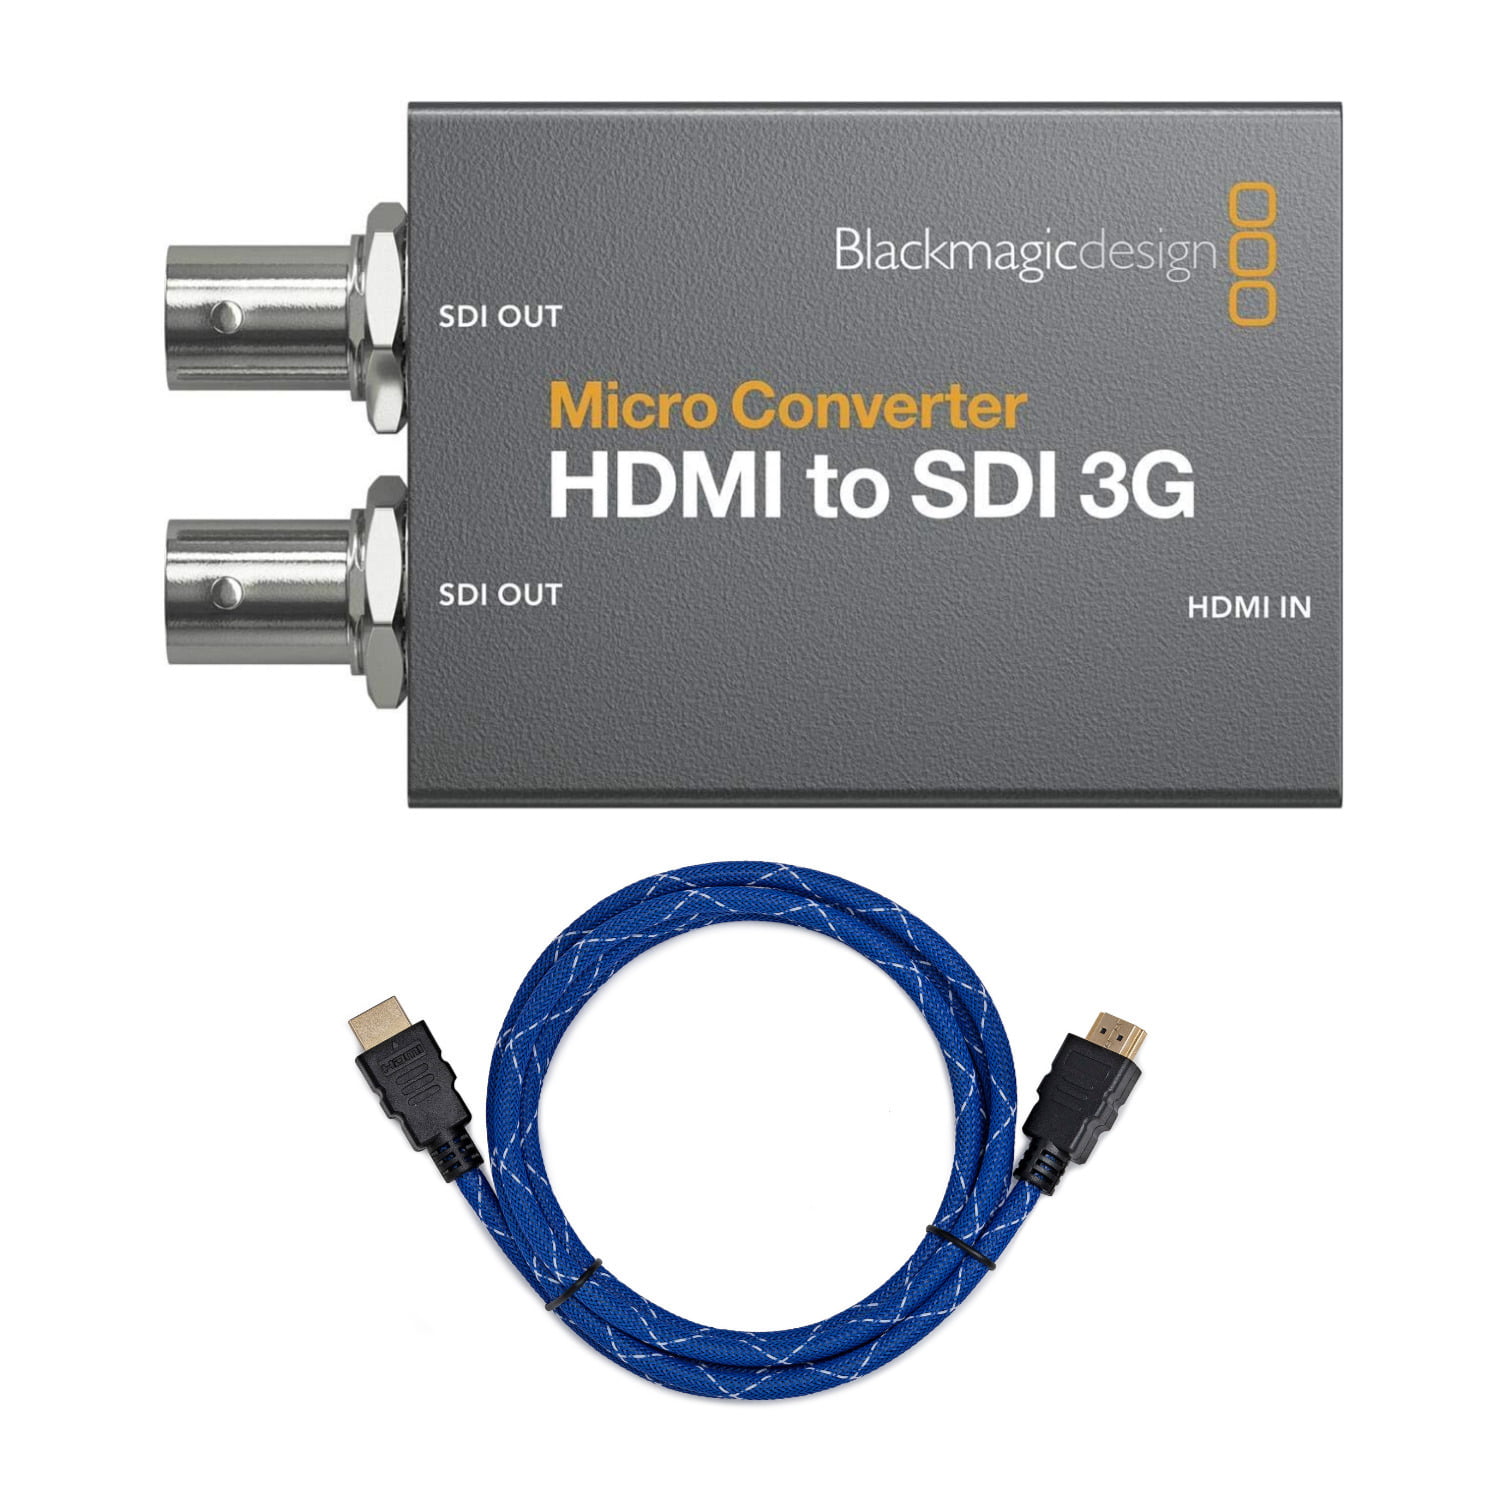 MiniConverter SDI to HDMI 3G FREE USA Shipping US seller SAME DAY FAST SHIPPING 